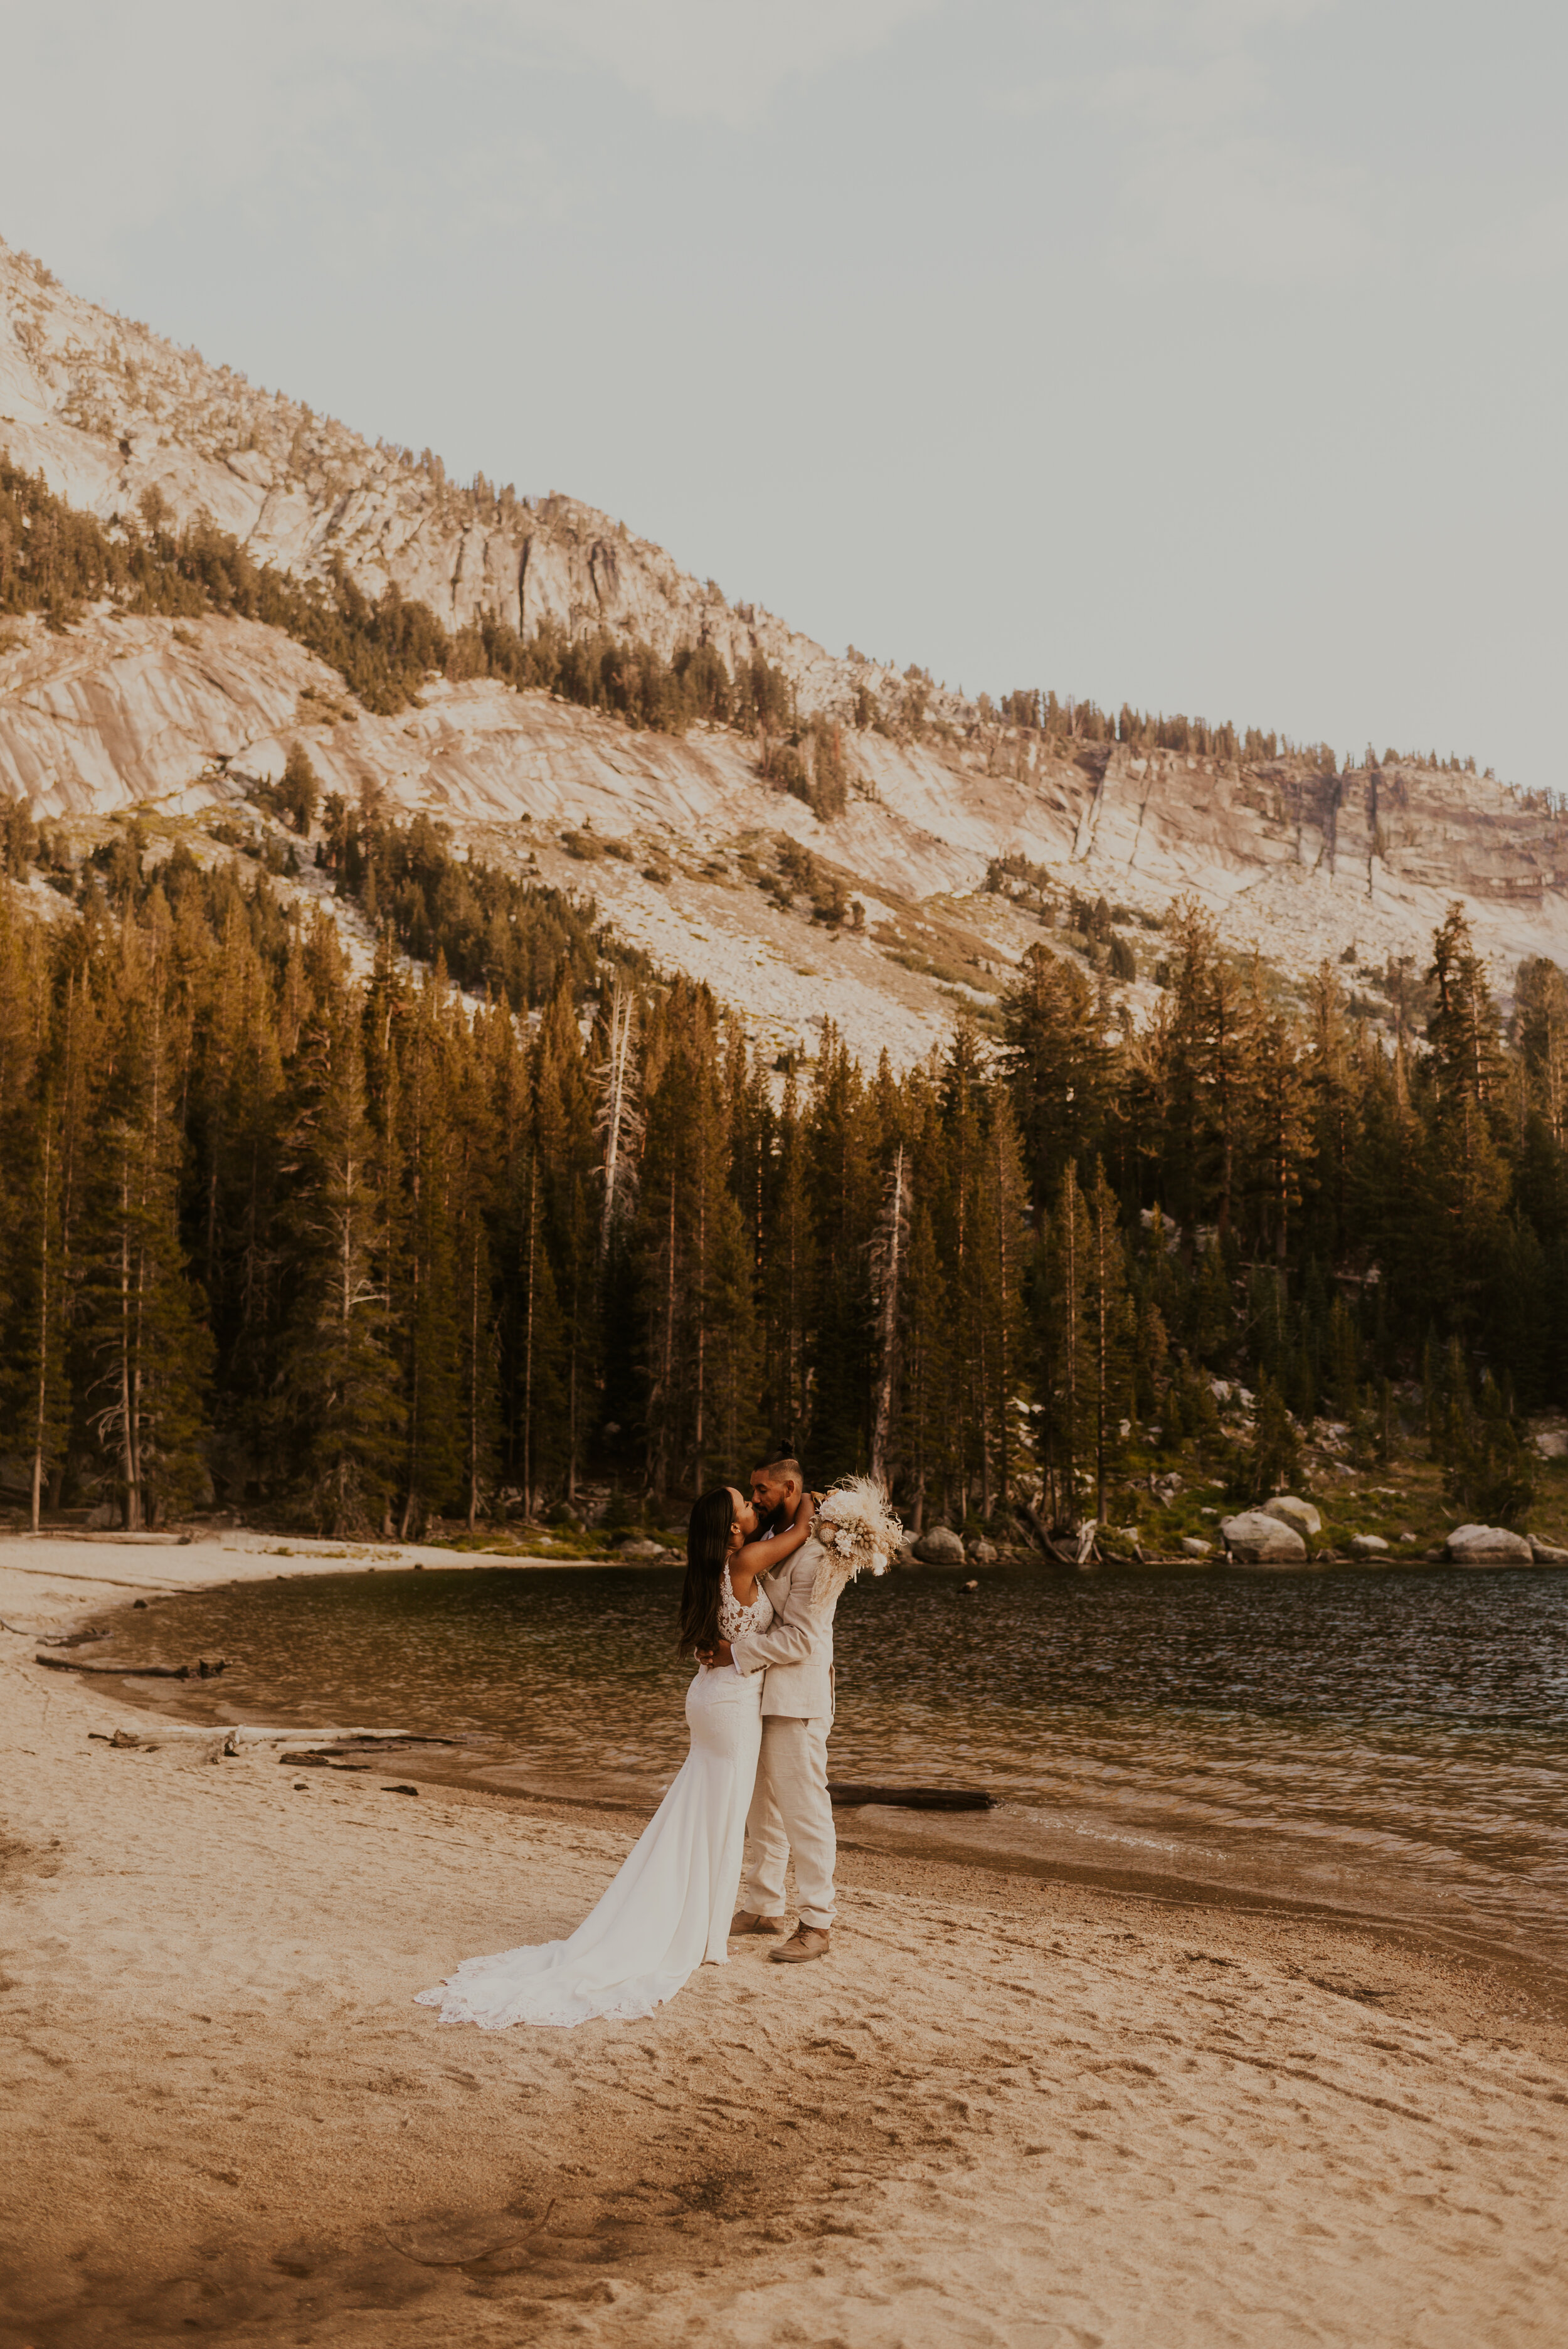 Tenaya Lake Elopement | Eloping in Yosemite National Park | Adventure Elopement Wedding | Yosemite Elopement Photographer 